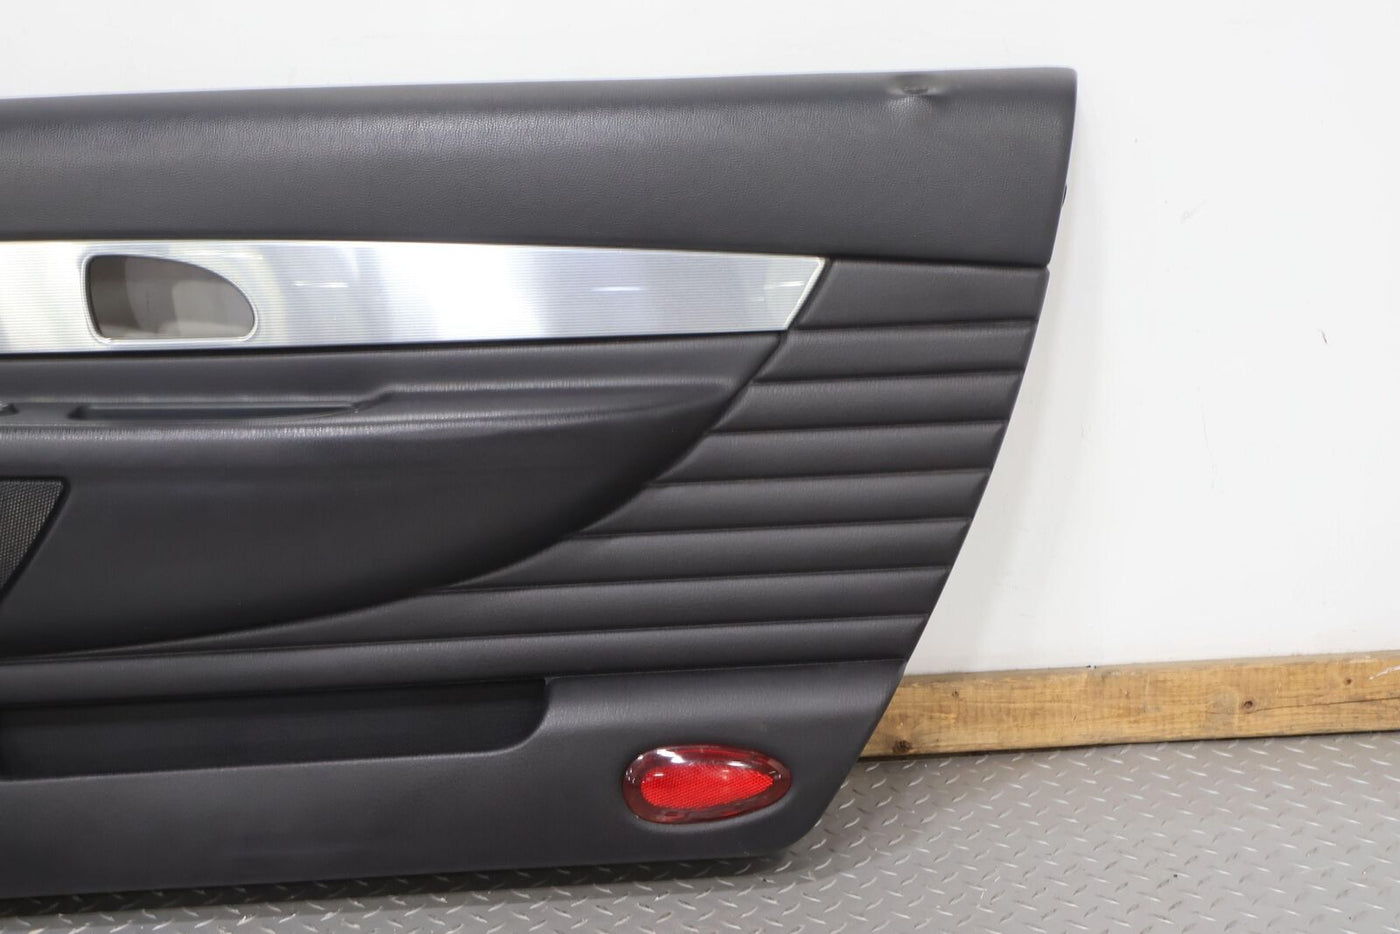 02-05 Ford Thunderbird Right RH Interior Door Trim Panel (Aluminum/Black BW)